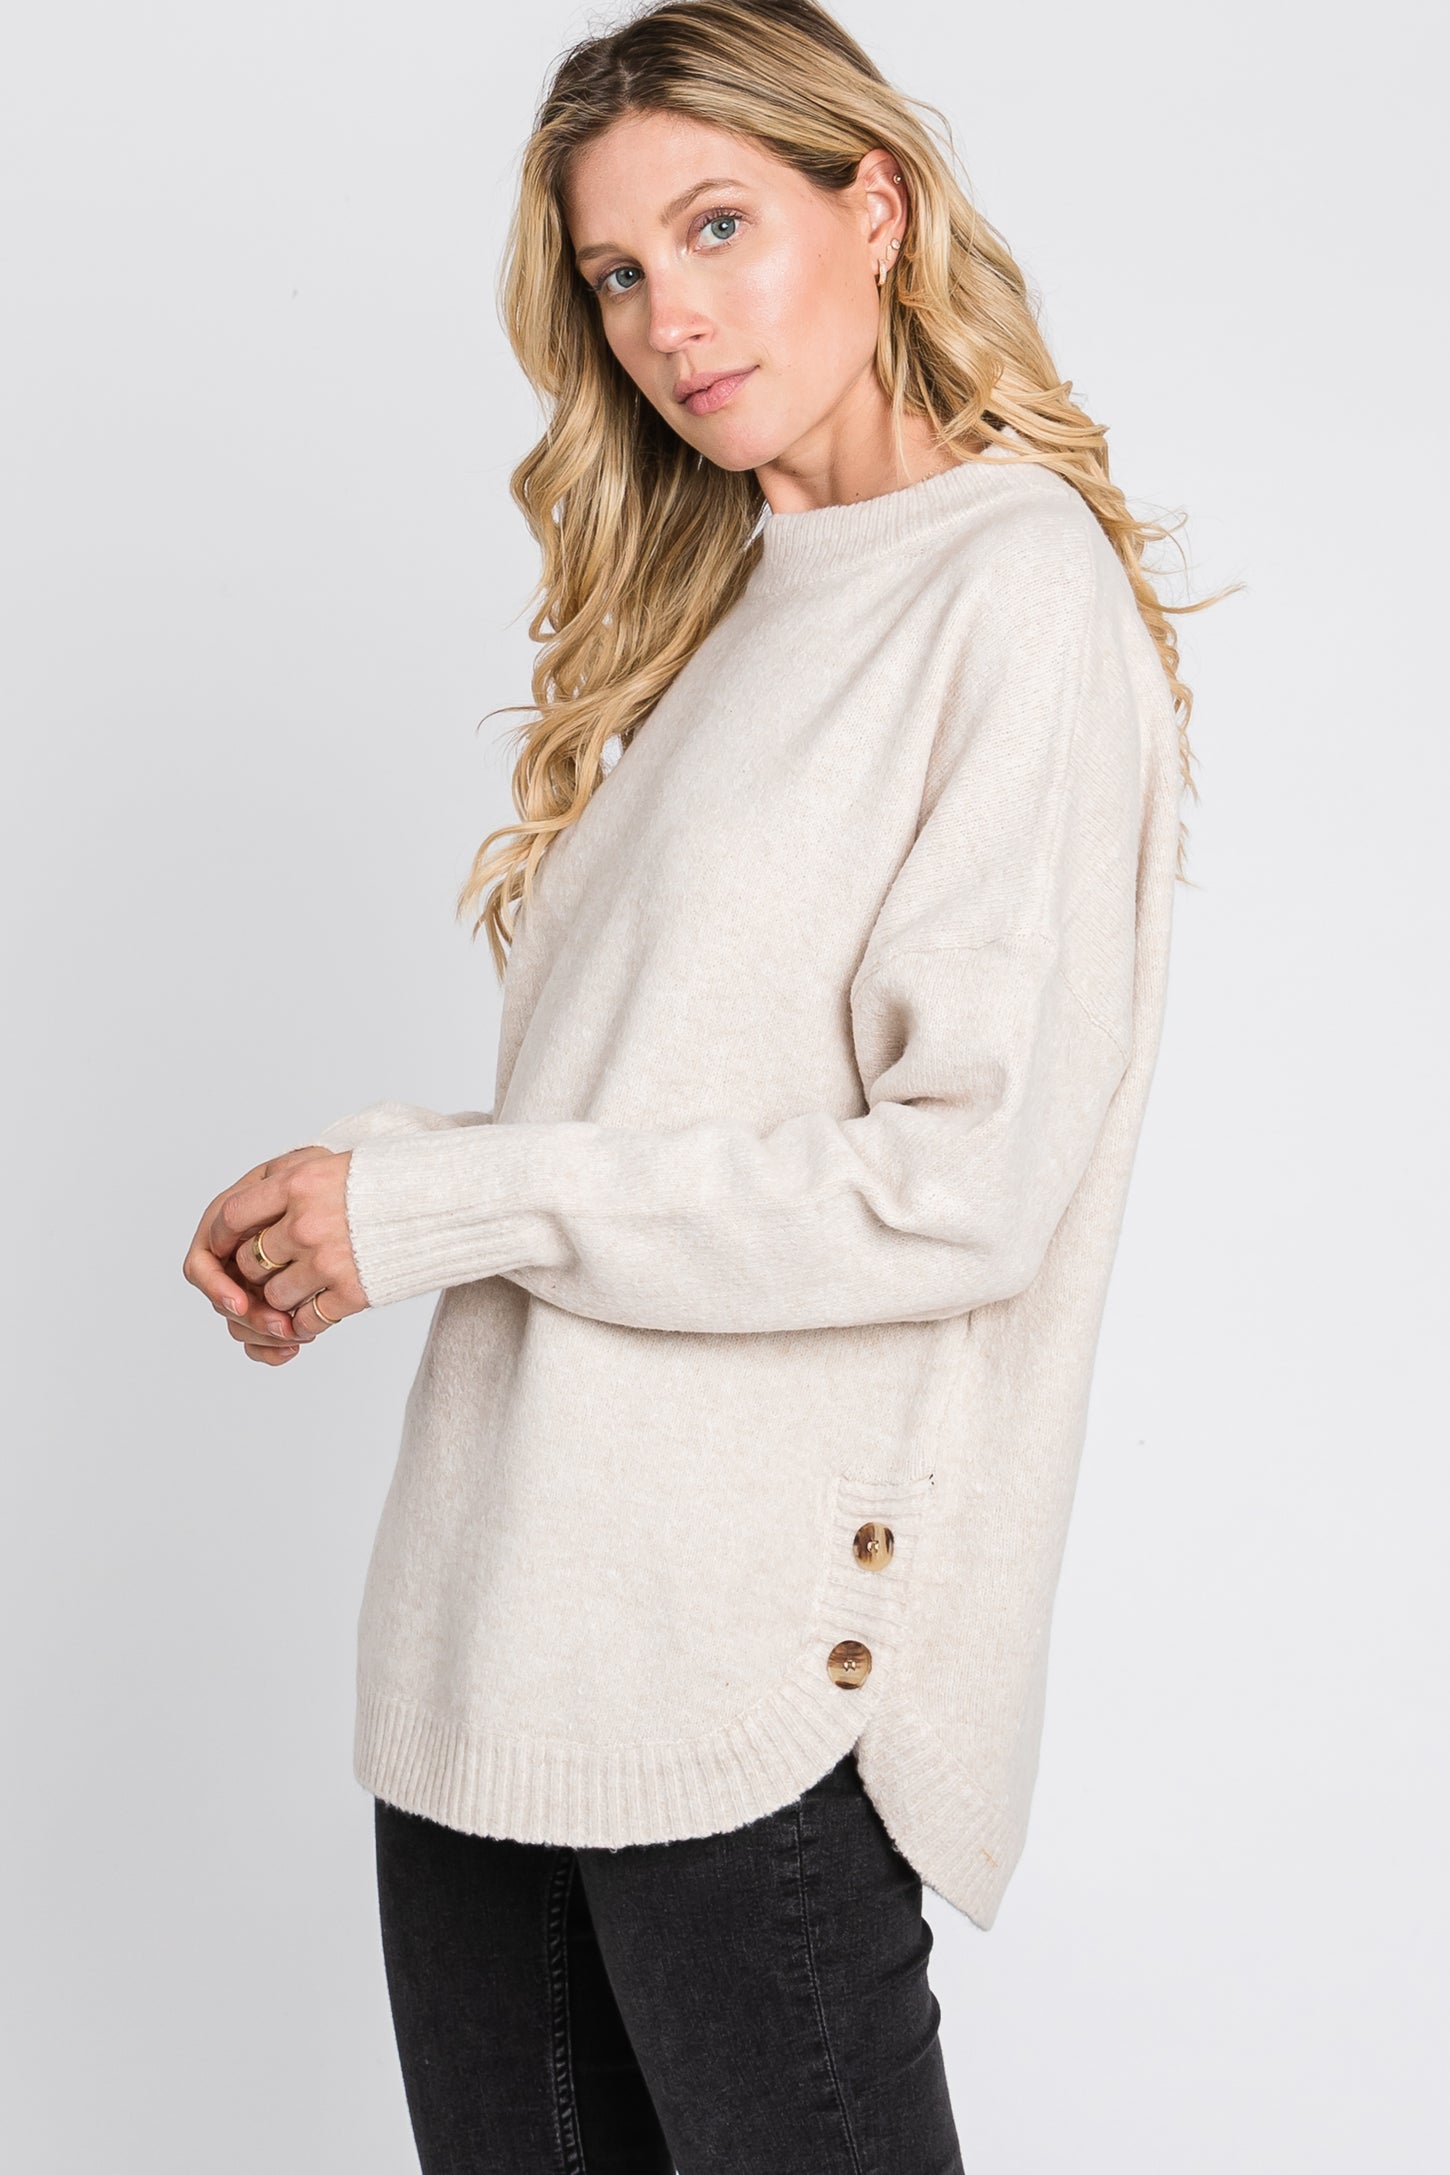 Beige Button Accent Sweater